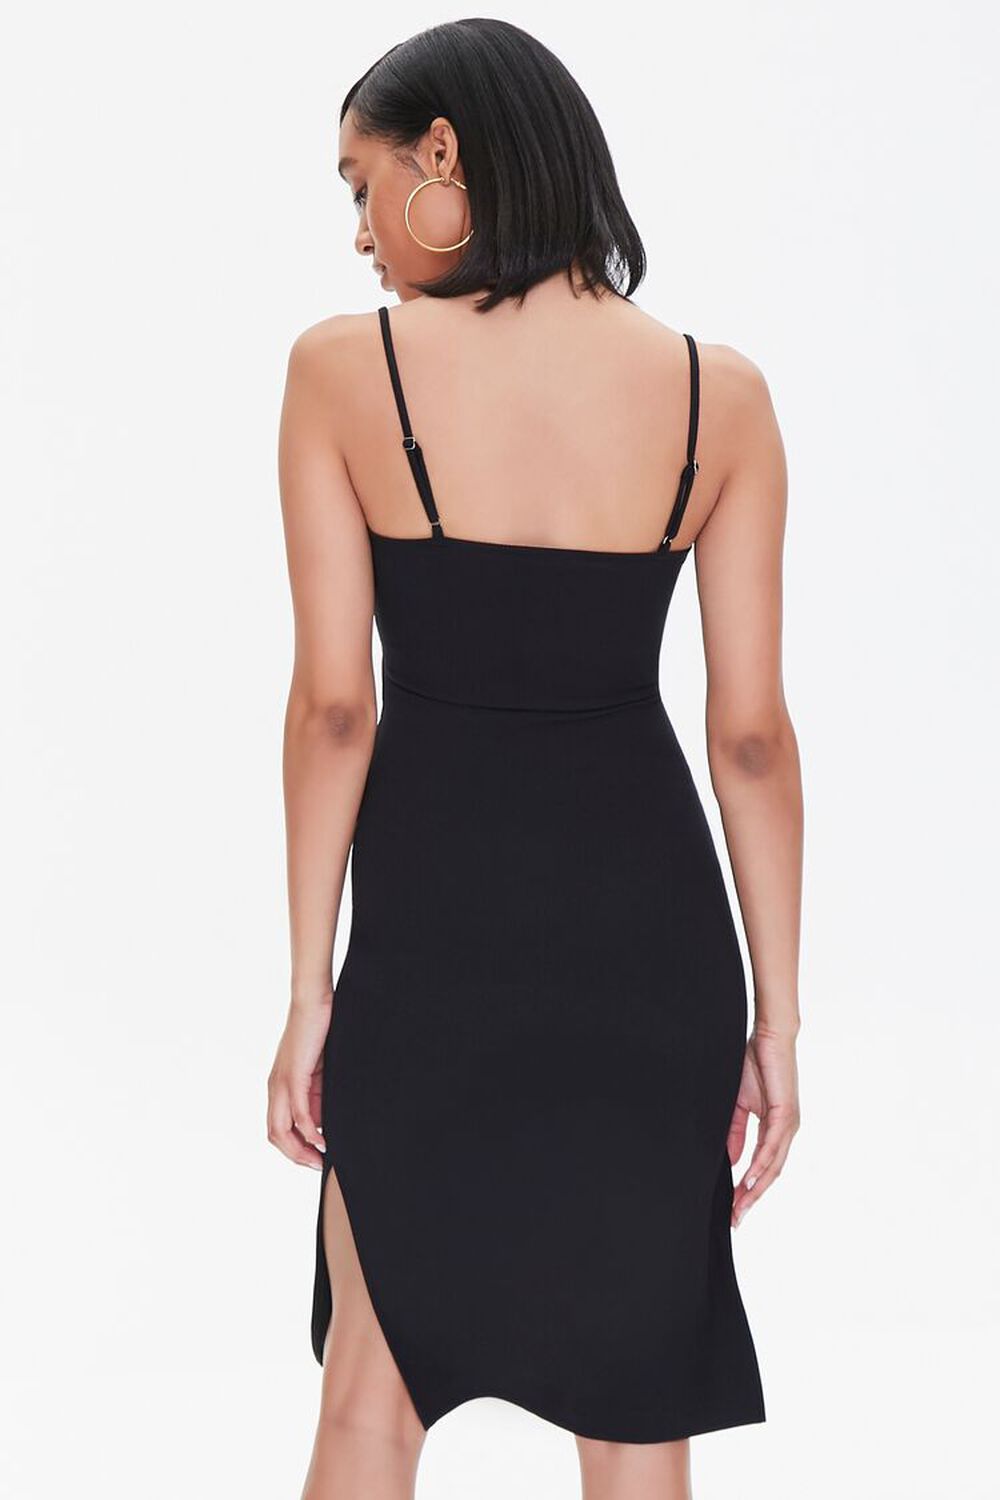 BLACK Strappy Cutout Cami Dress, image 3